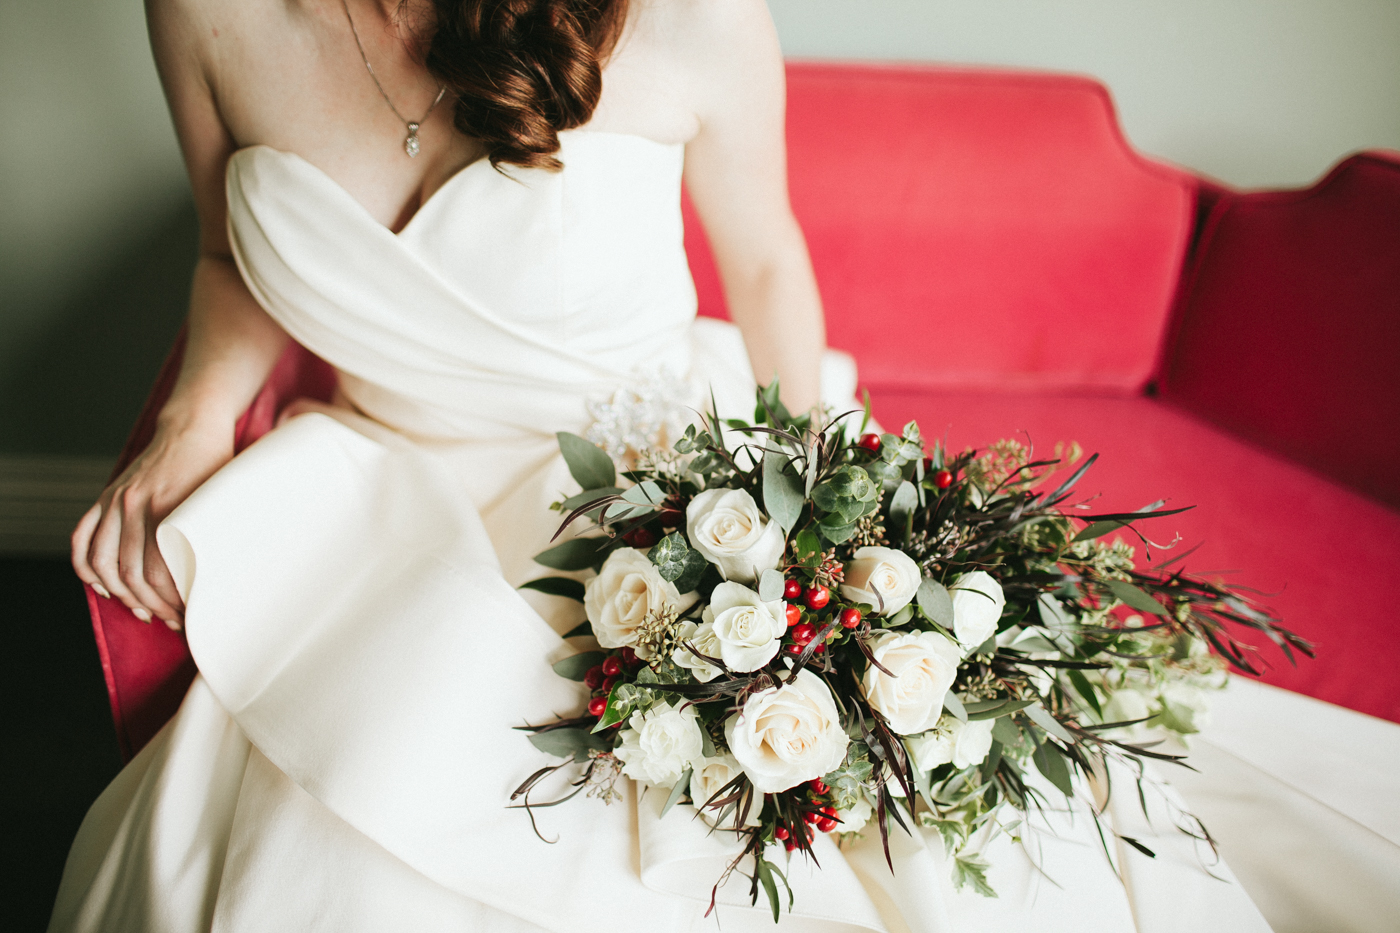 fig-house-holiday-winter-white-rose-vintage-fur-los-angeles-wedding-inspiration15